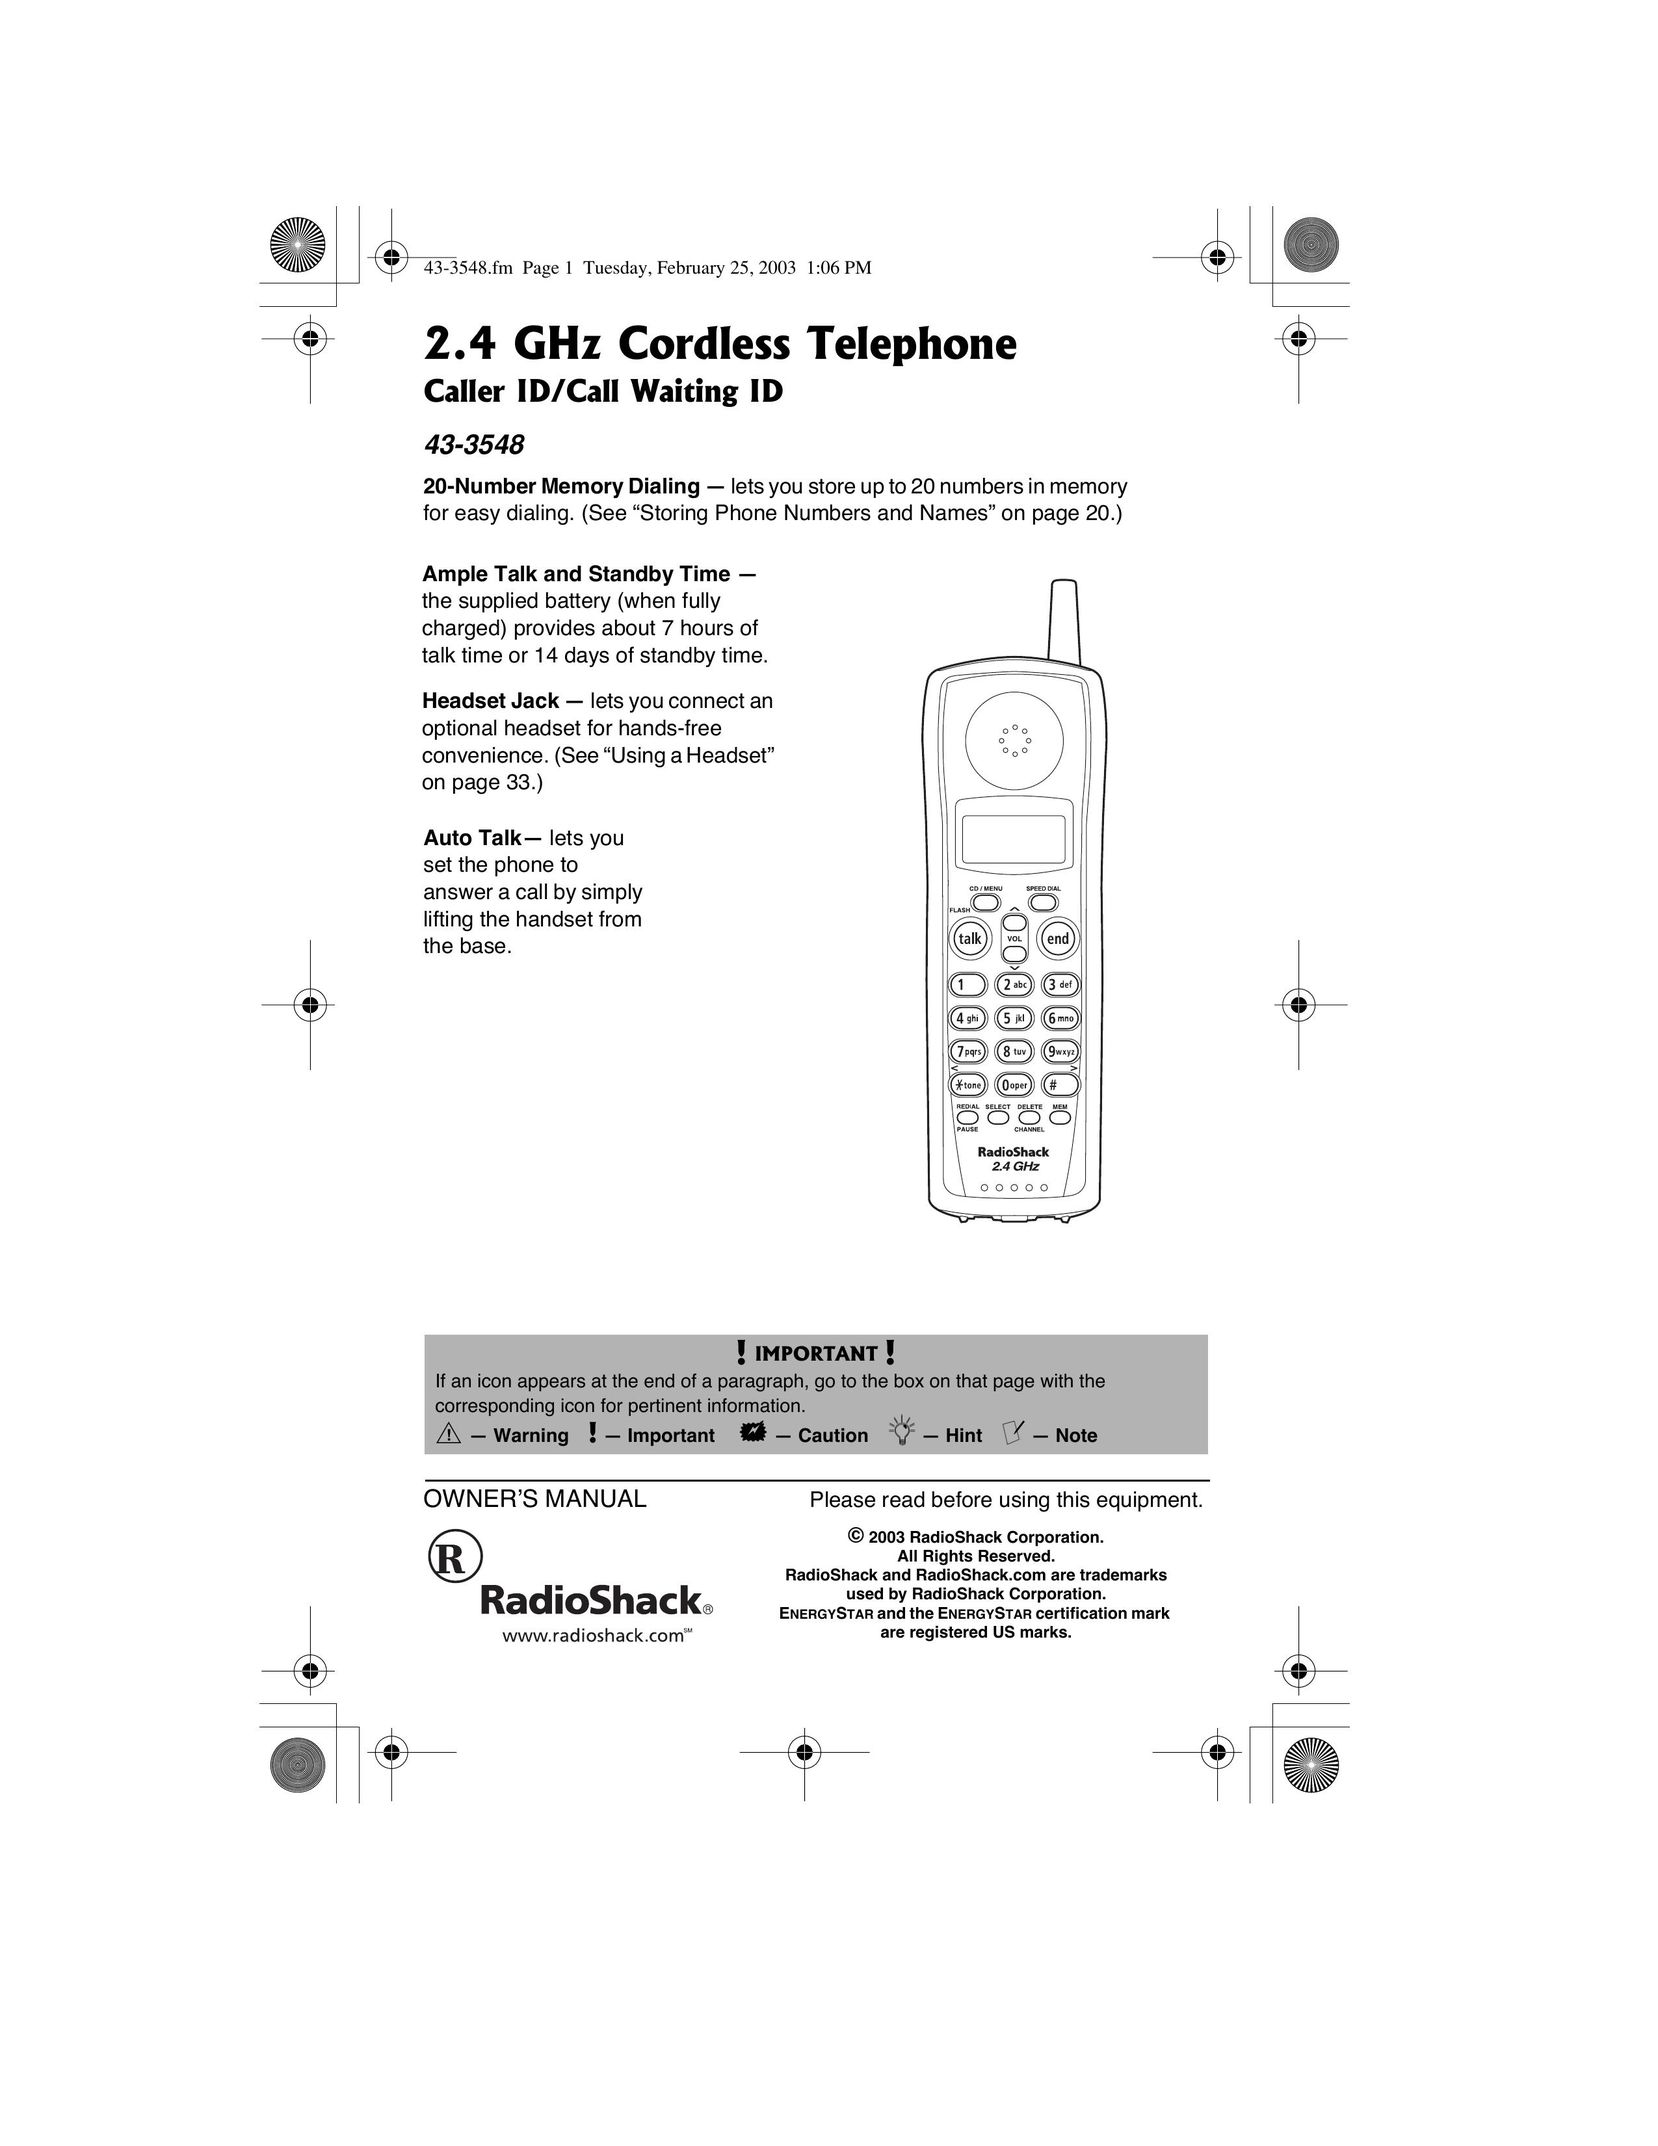 Radio Shack 43-3548 Cordless Telephone User Manual